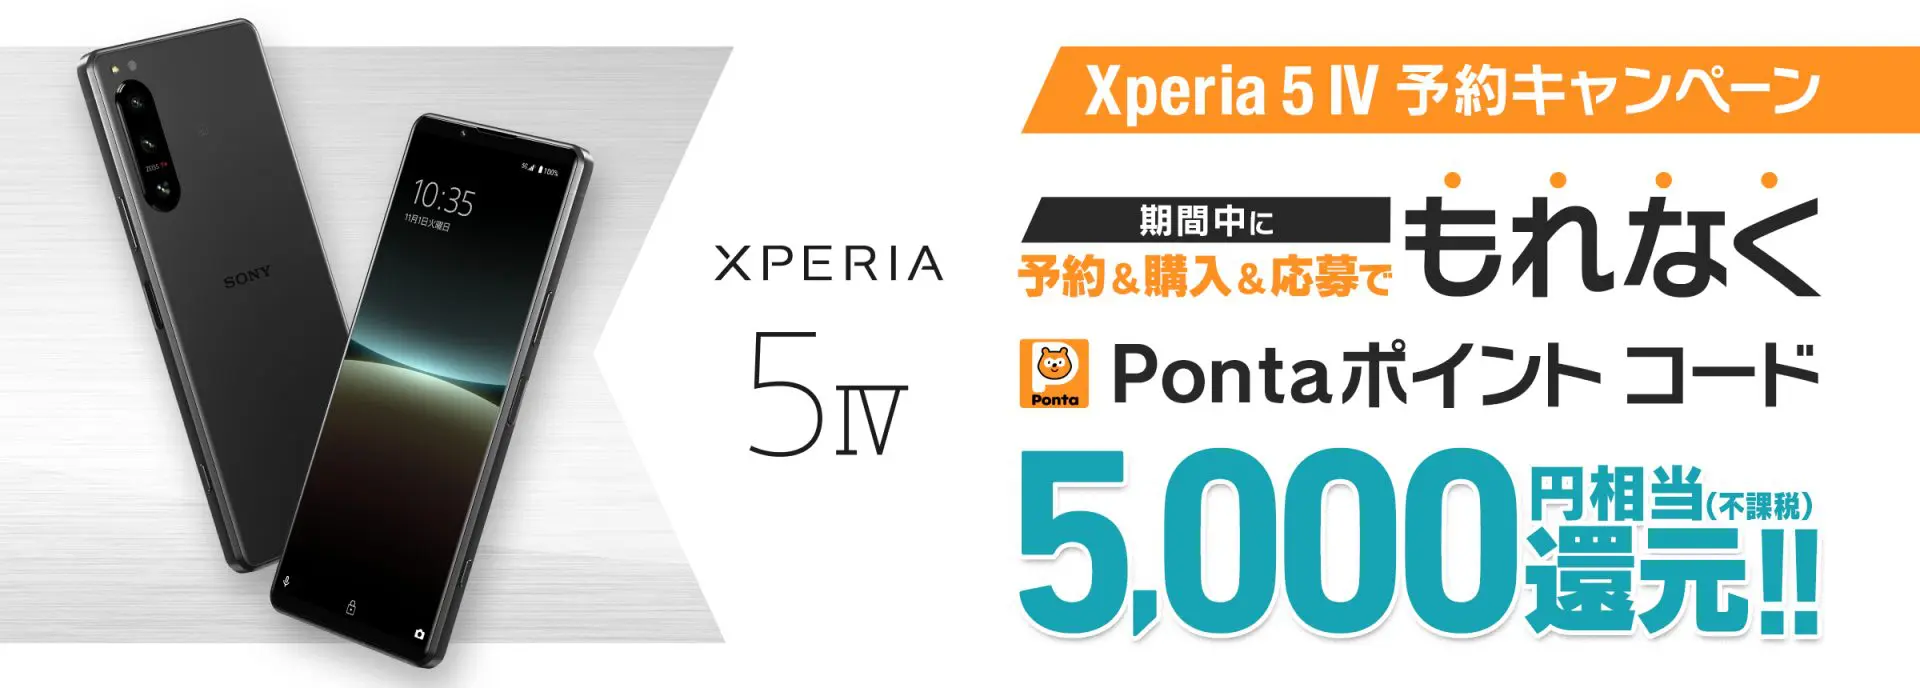 Xperia 5 IV 予約キャンペーン